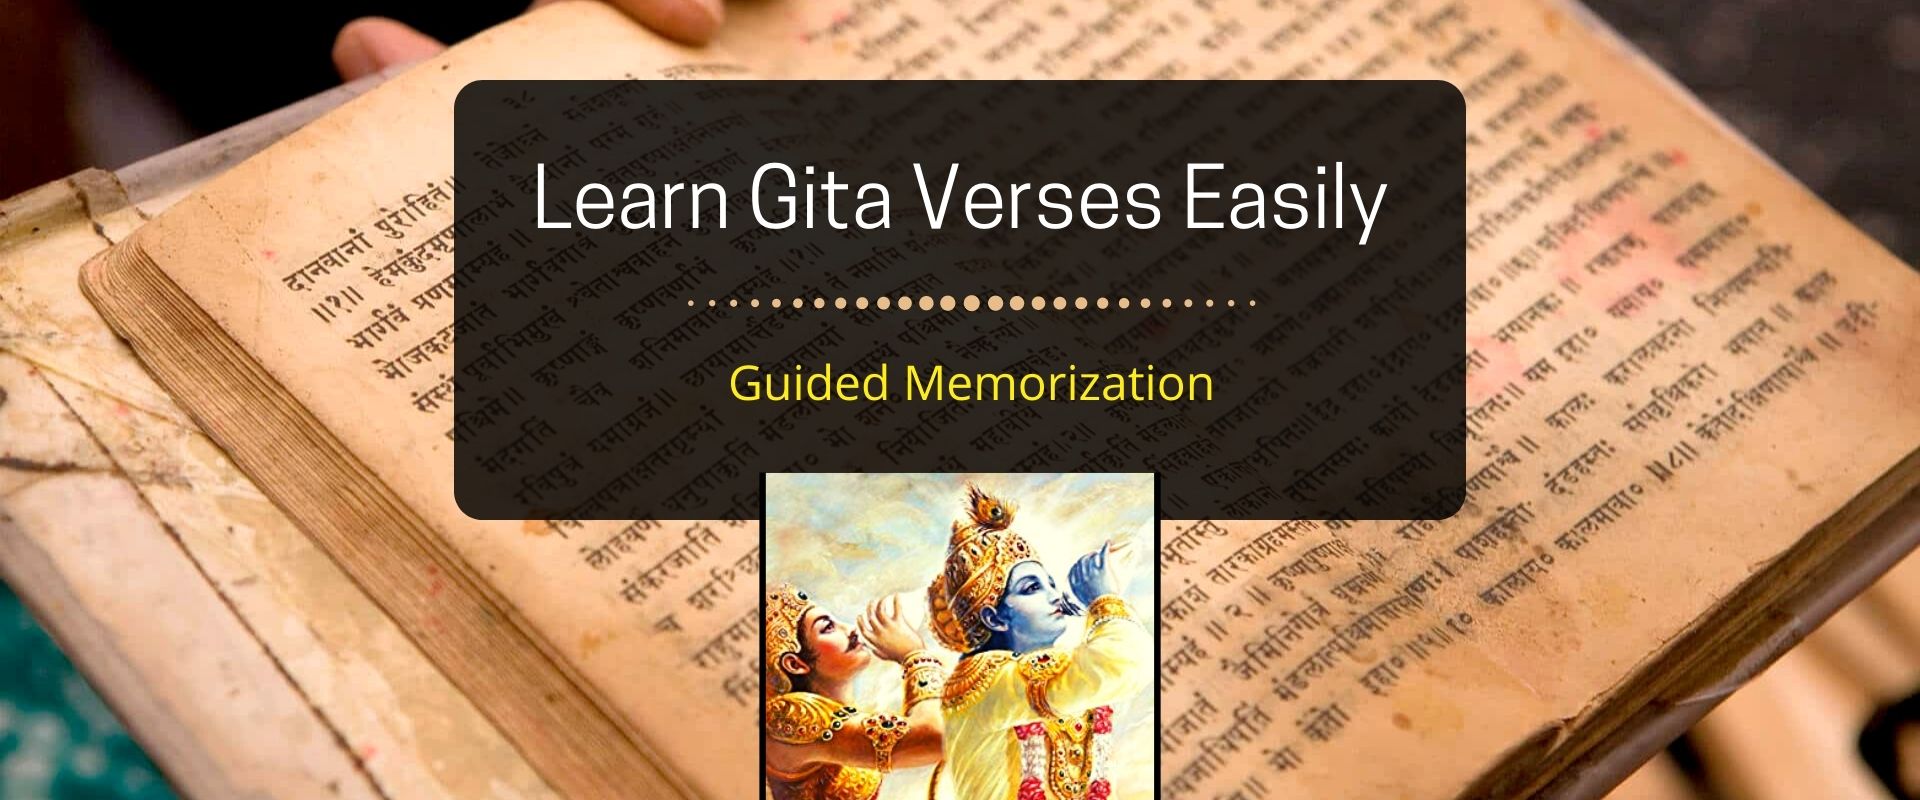 Learn Gita Verses Easily